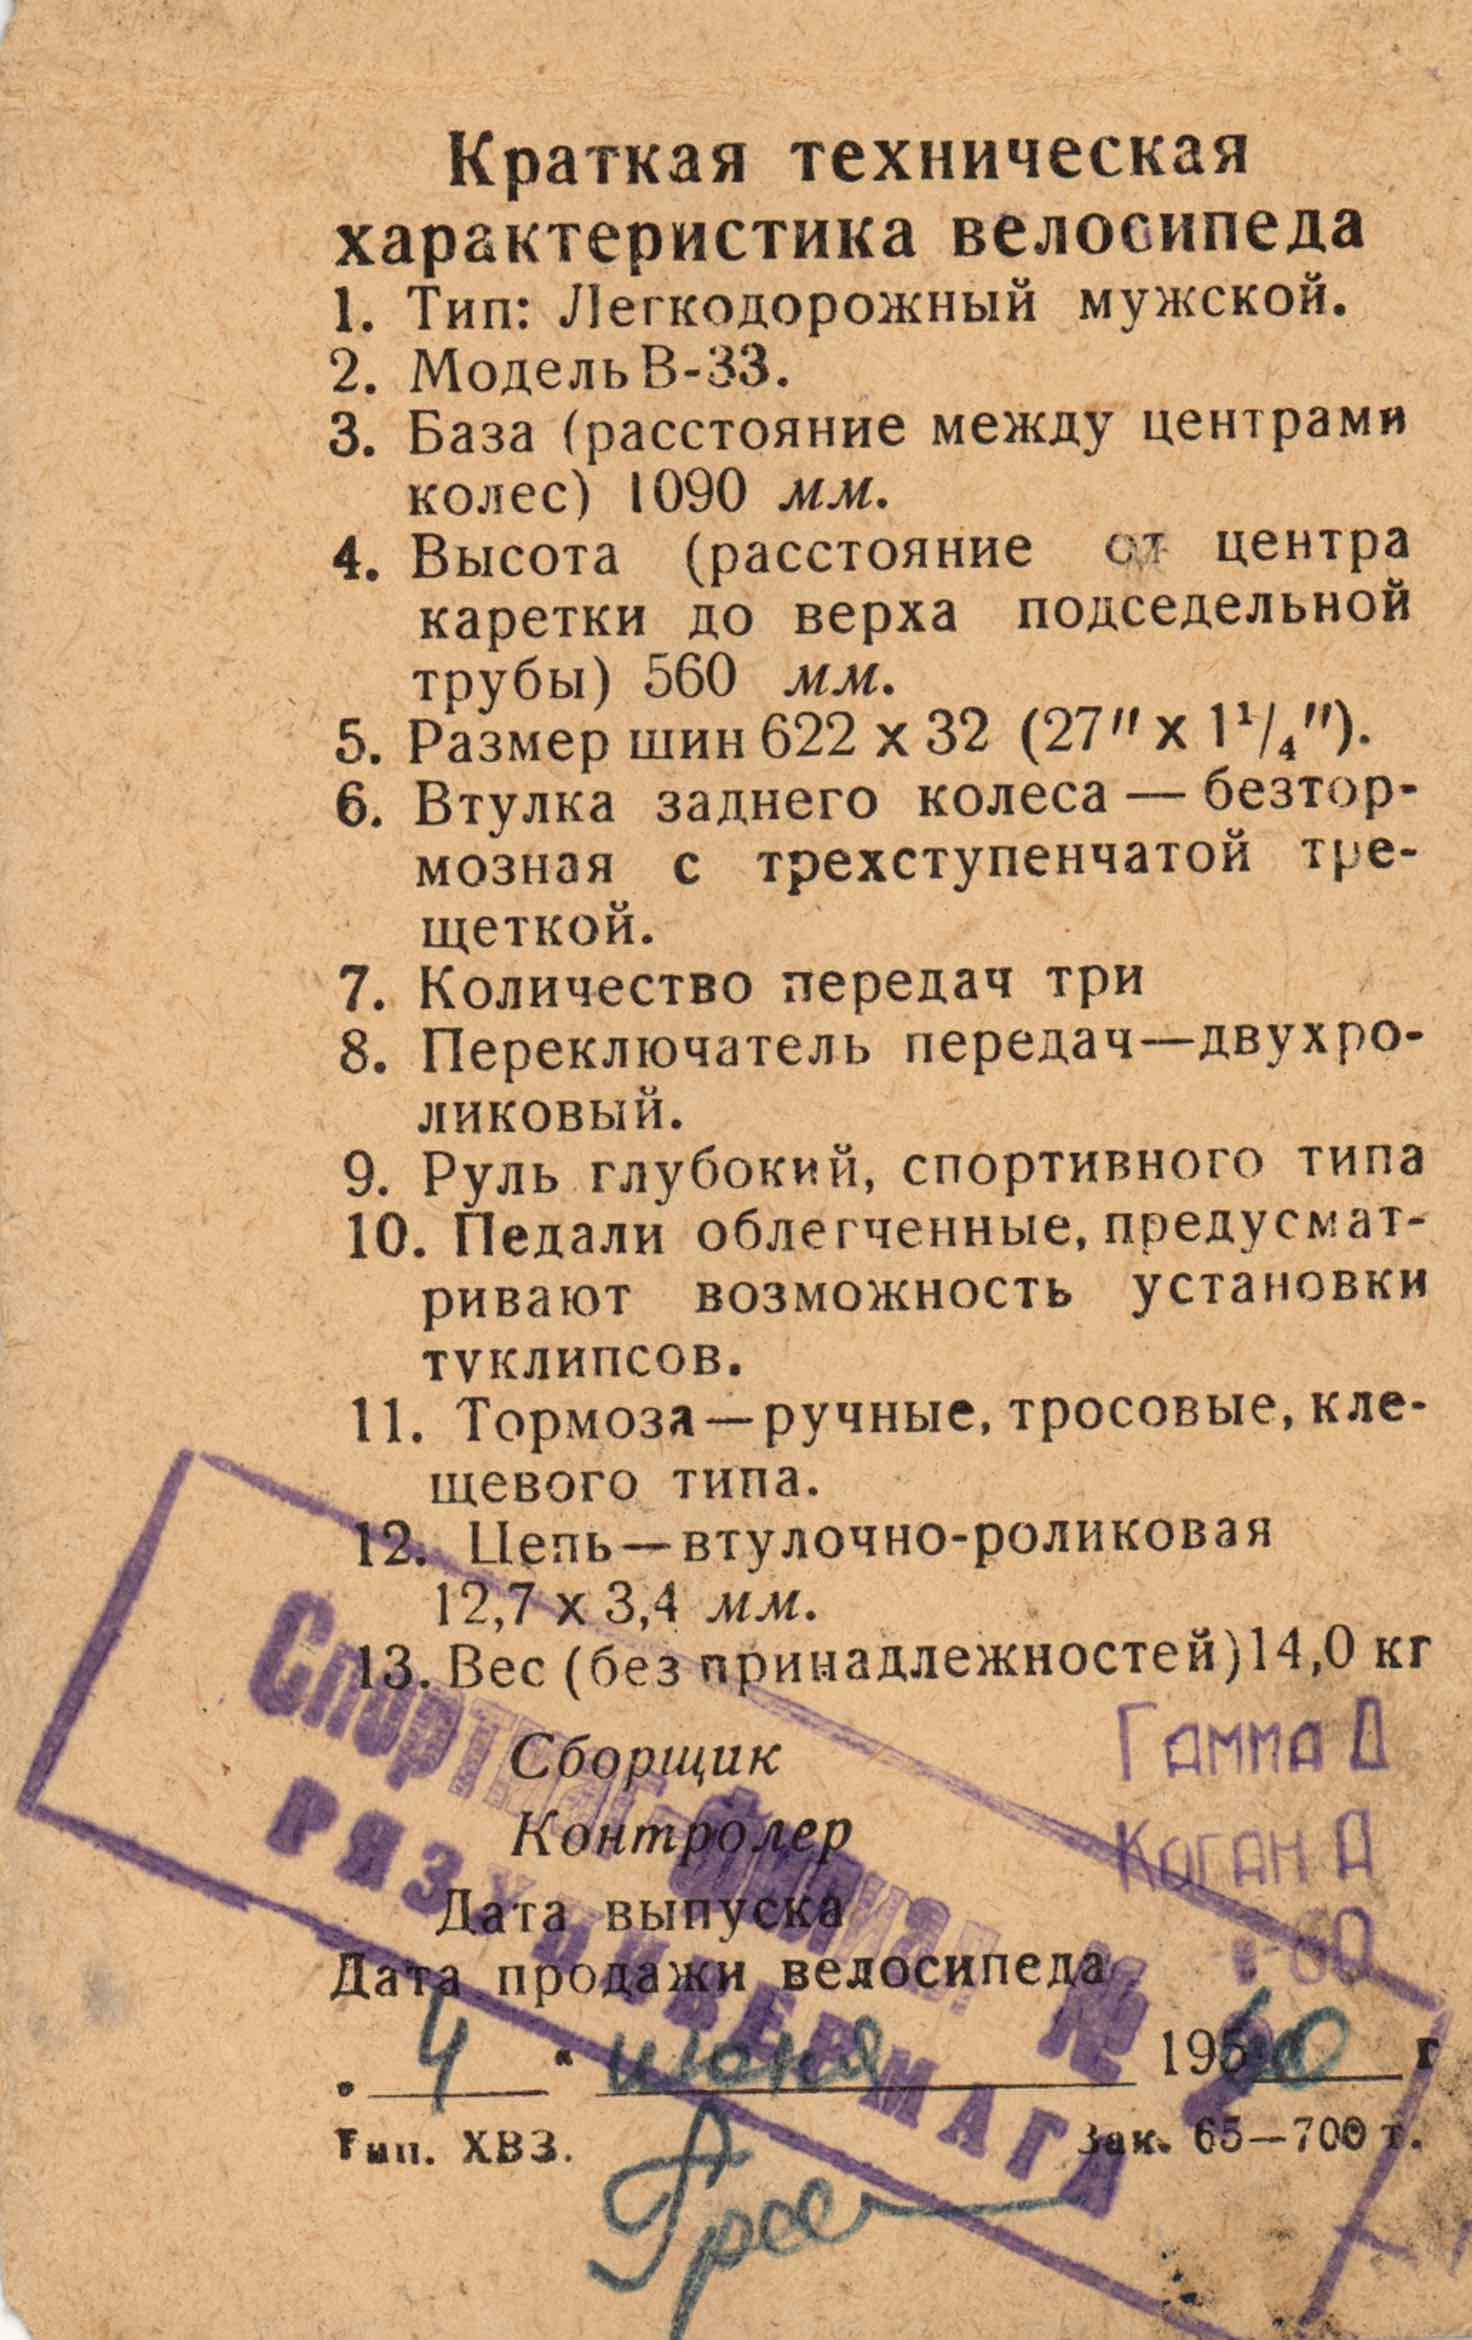 Kharkov - Pasport Velocipeda B-33 1960 scan 3 main image